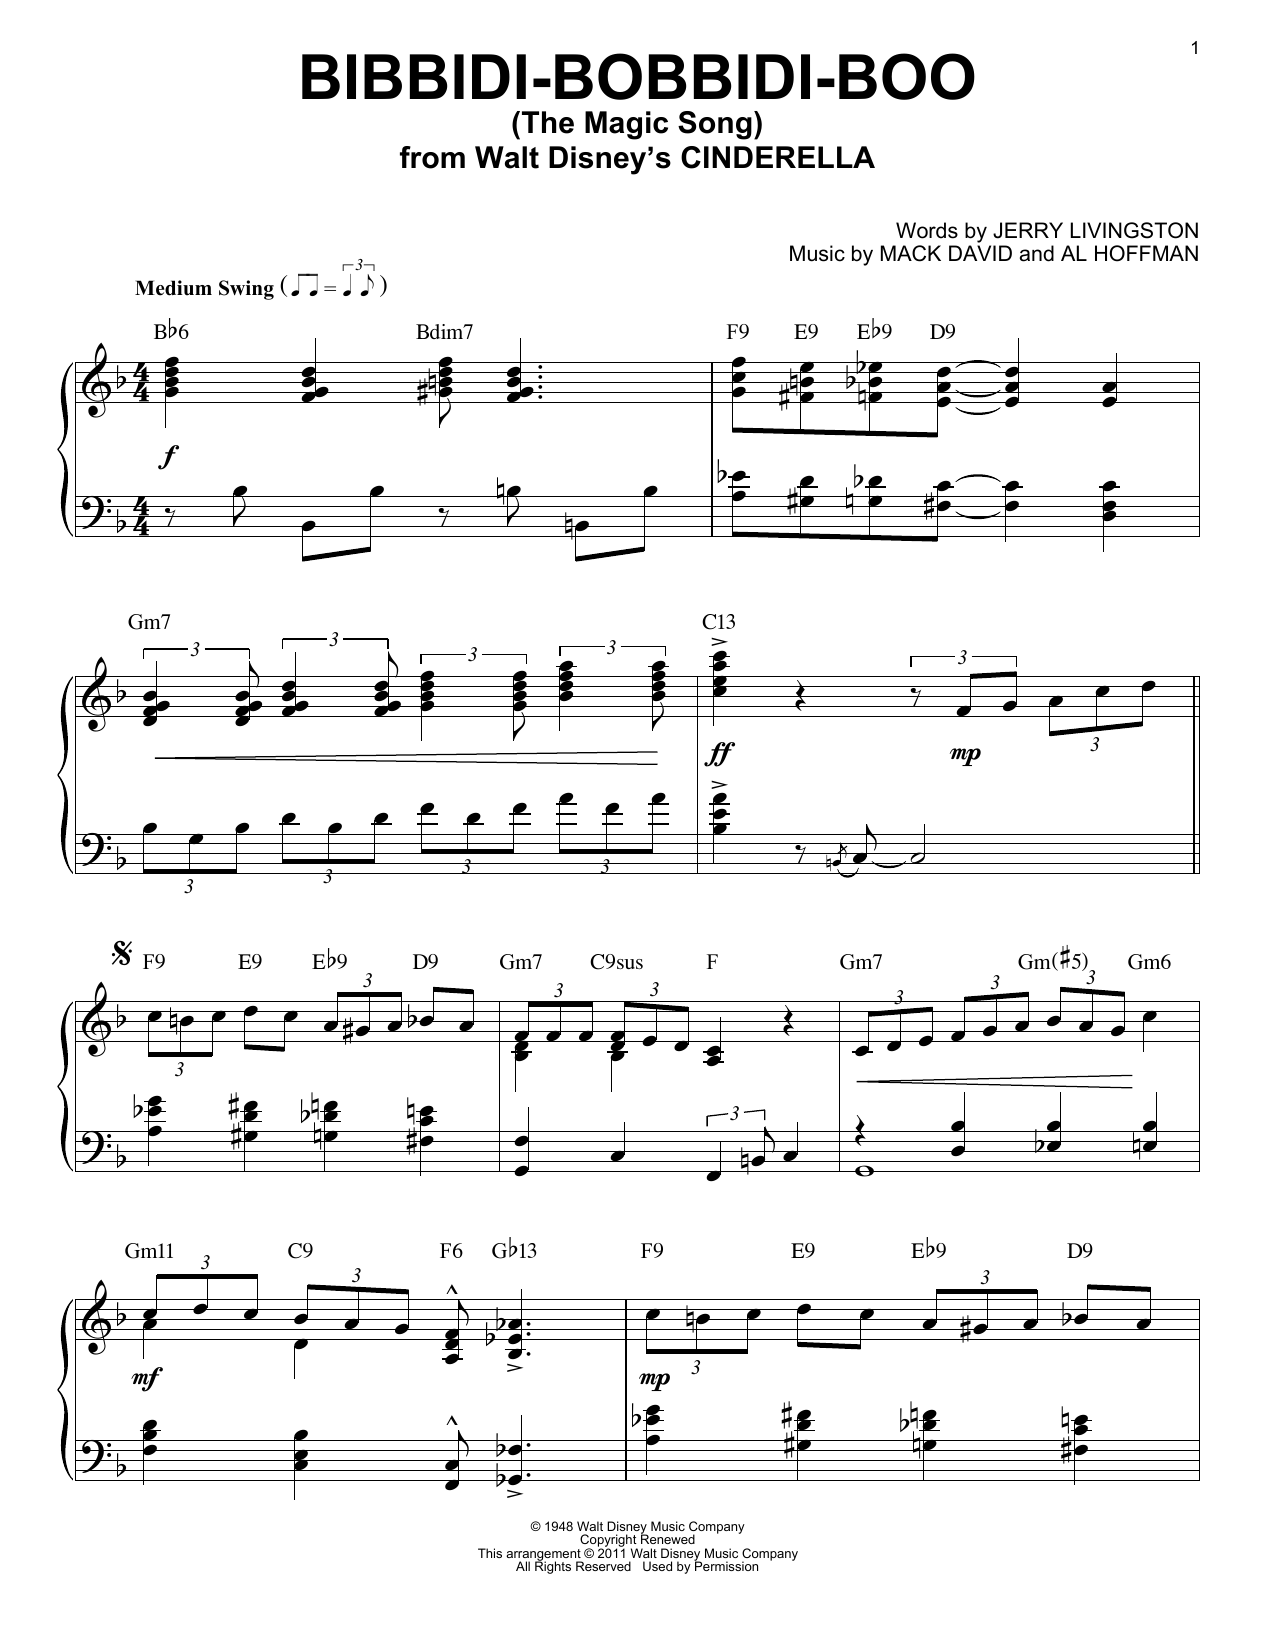 Verna Felton Bibbidi-Bobbidi-Boo (The Magic Song) [Jazz version] (arr. Brent Edstrom) Sheet Music Notes & Chords for Piano - Download or Print PDF